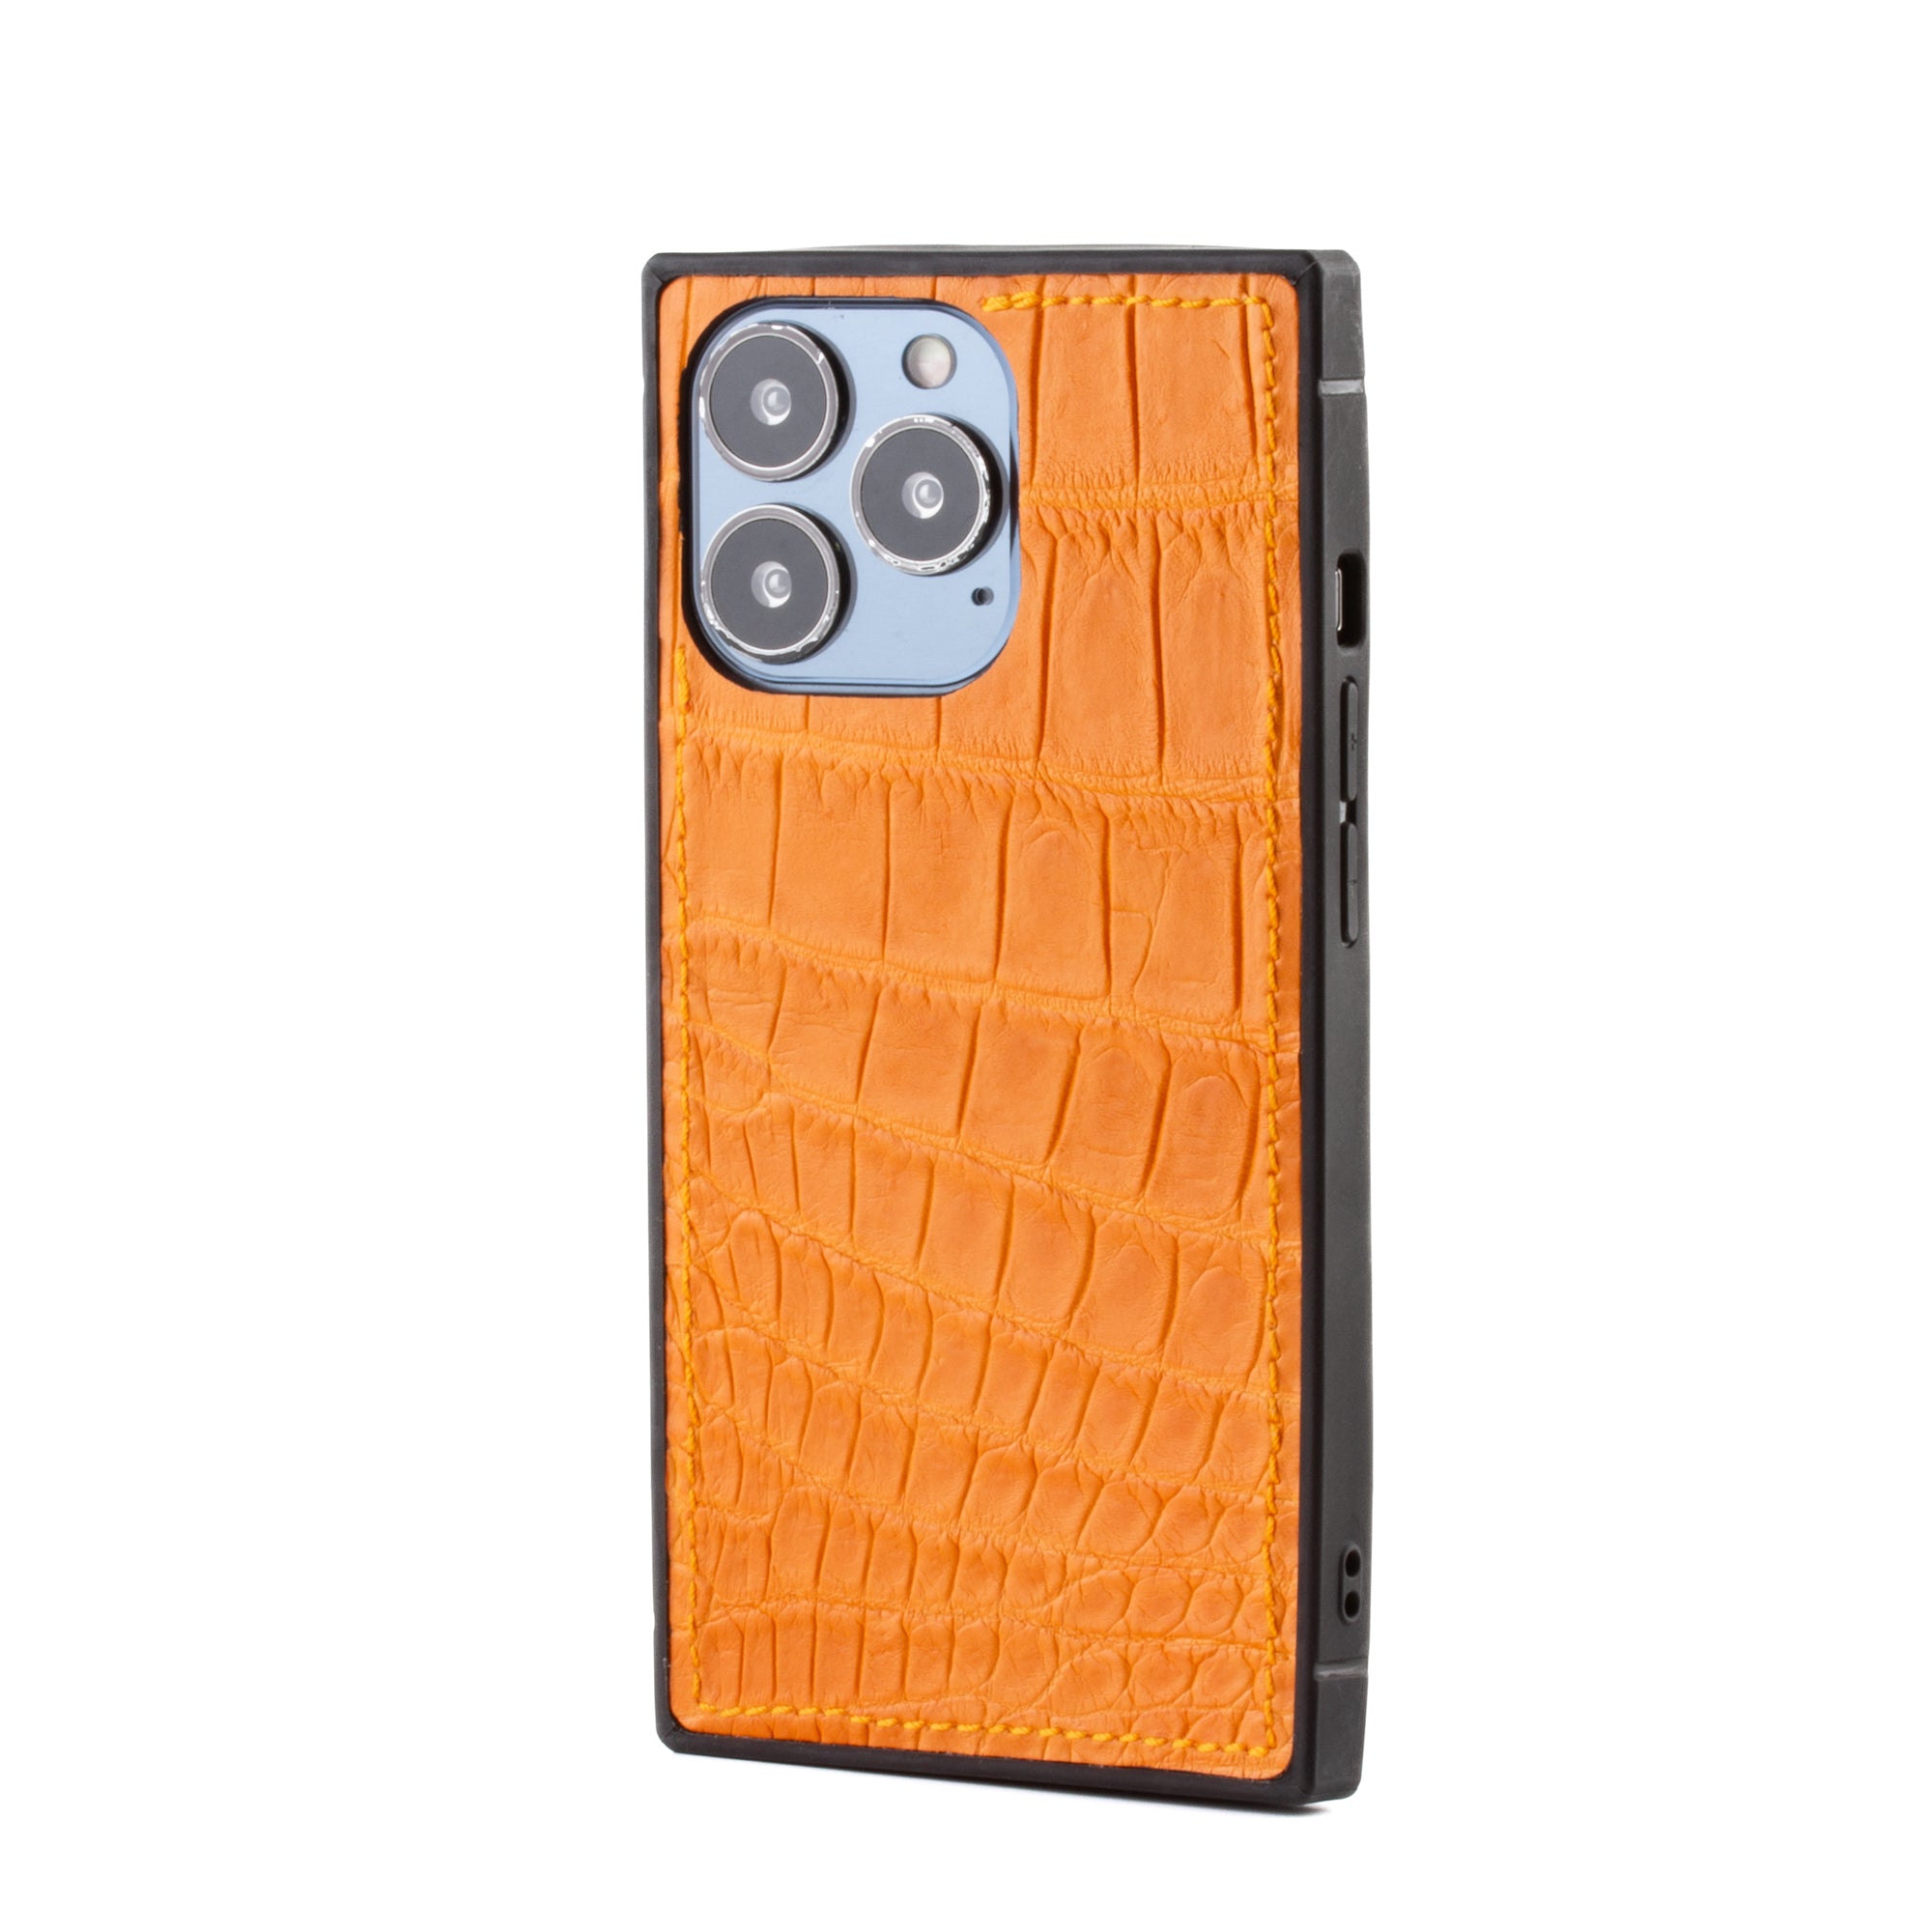 Clearance Sale - Leather iPhone "Square Case" - iPhone 13 Pro - Orange alligator